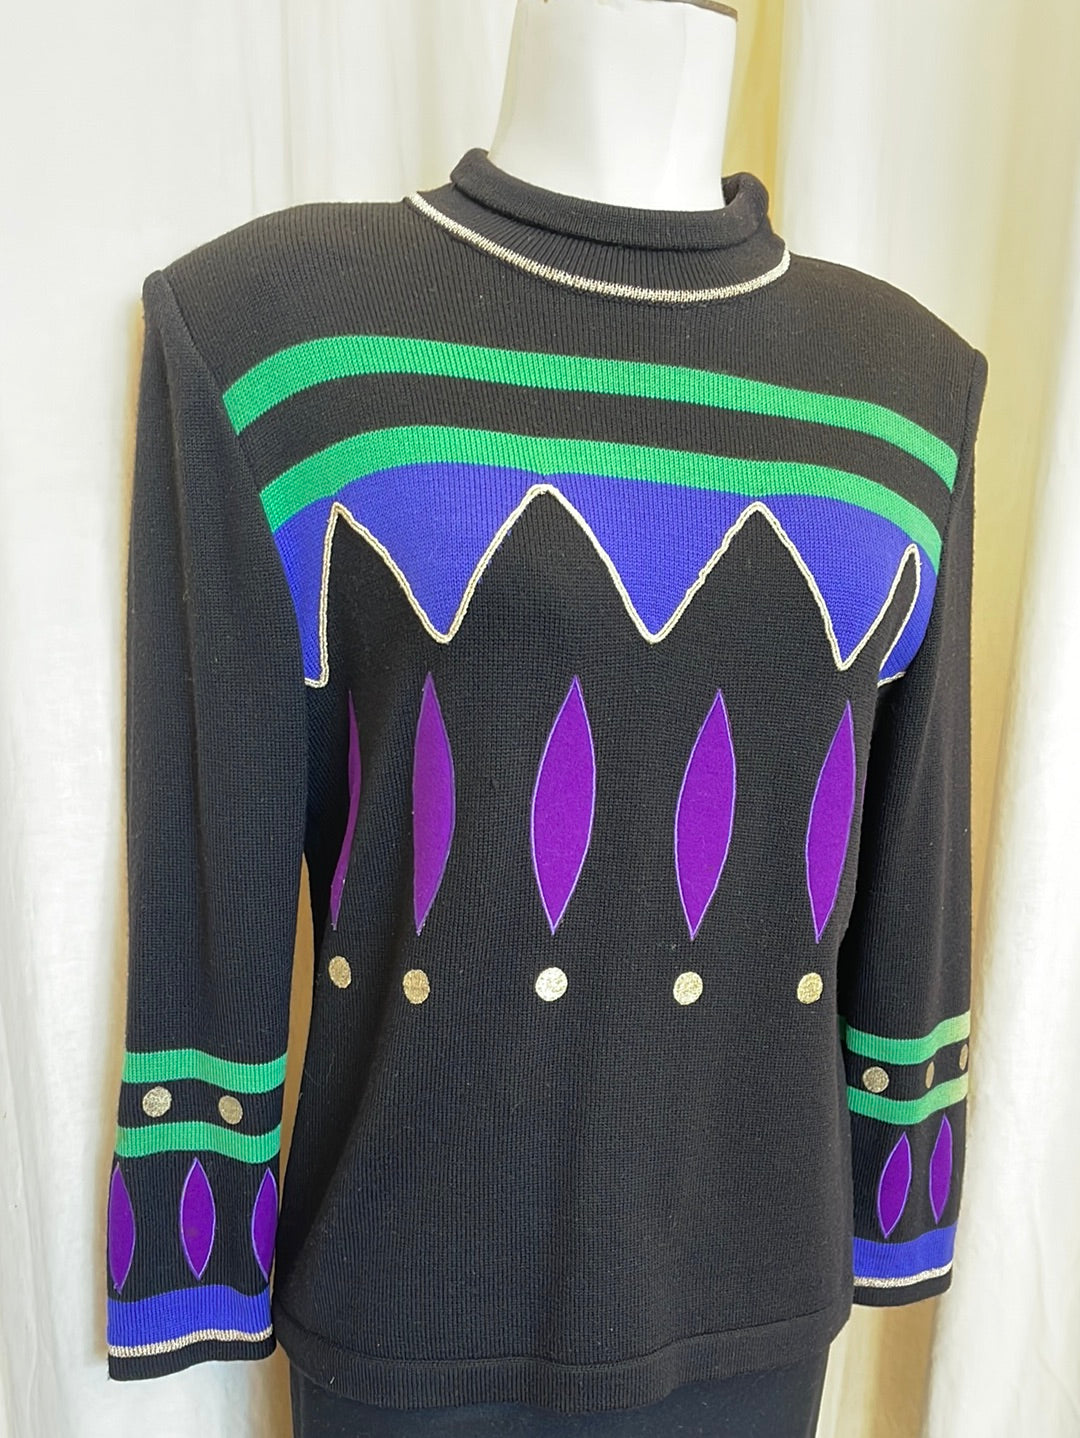 LOUIS FERAUD Sweatshirts Women Medium Vintage 90's Louis 